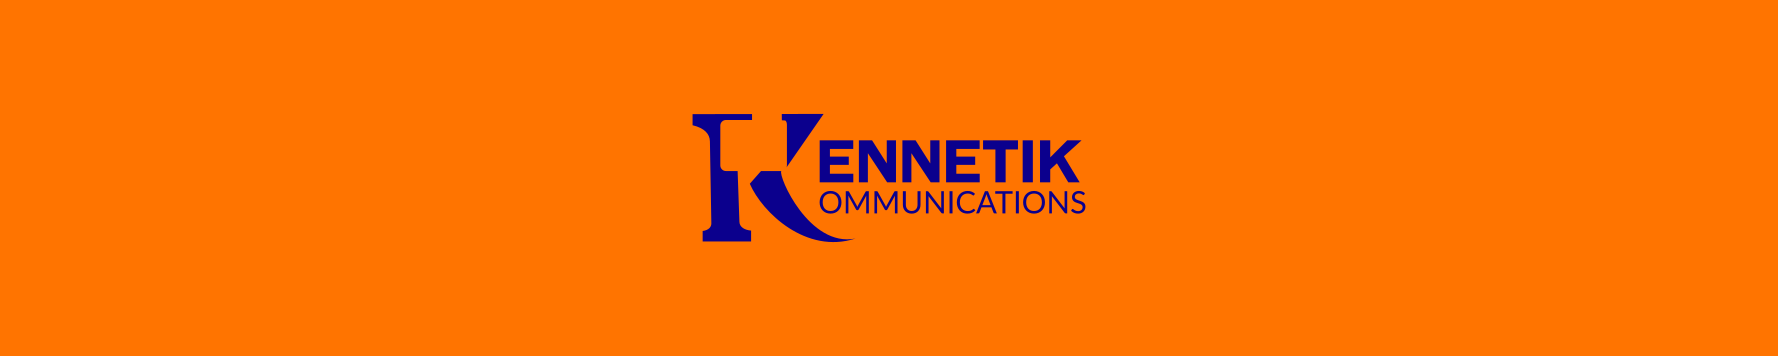 The final logo for Kennetik Kommunications